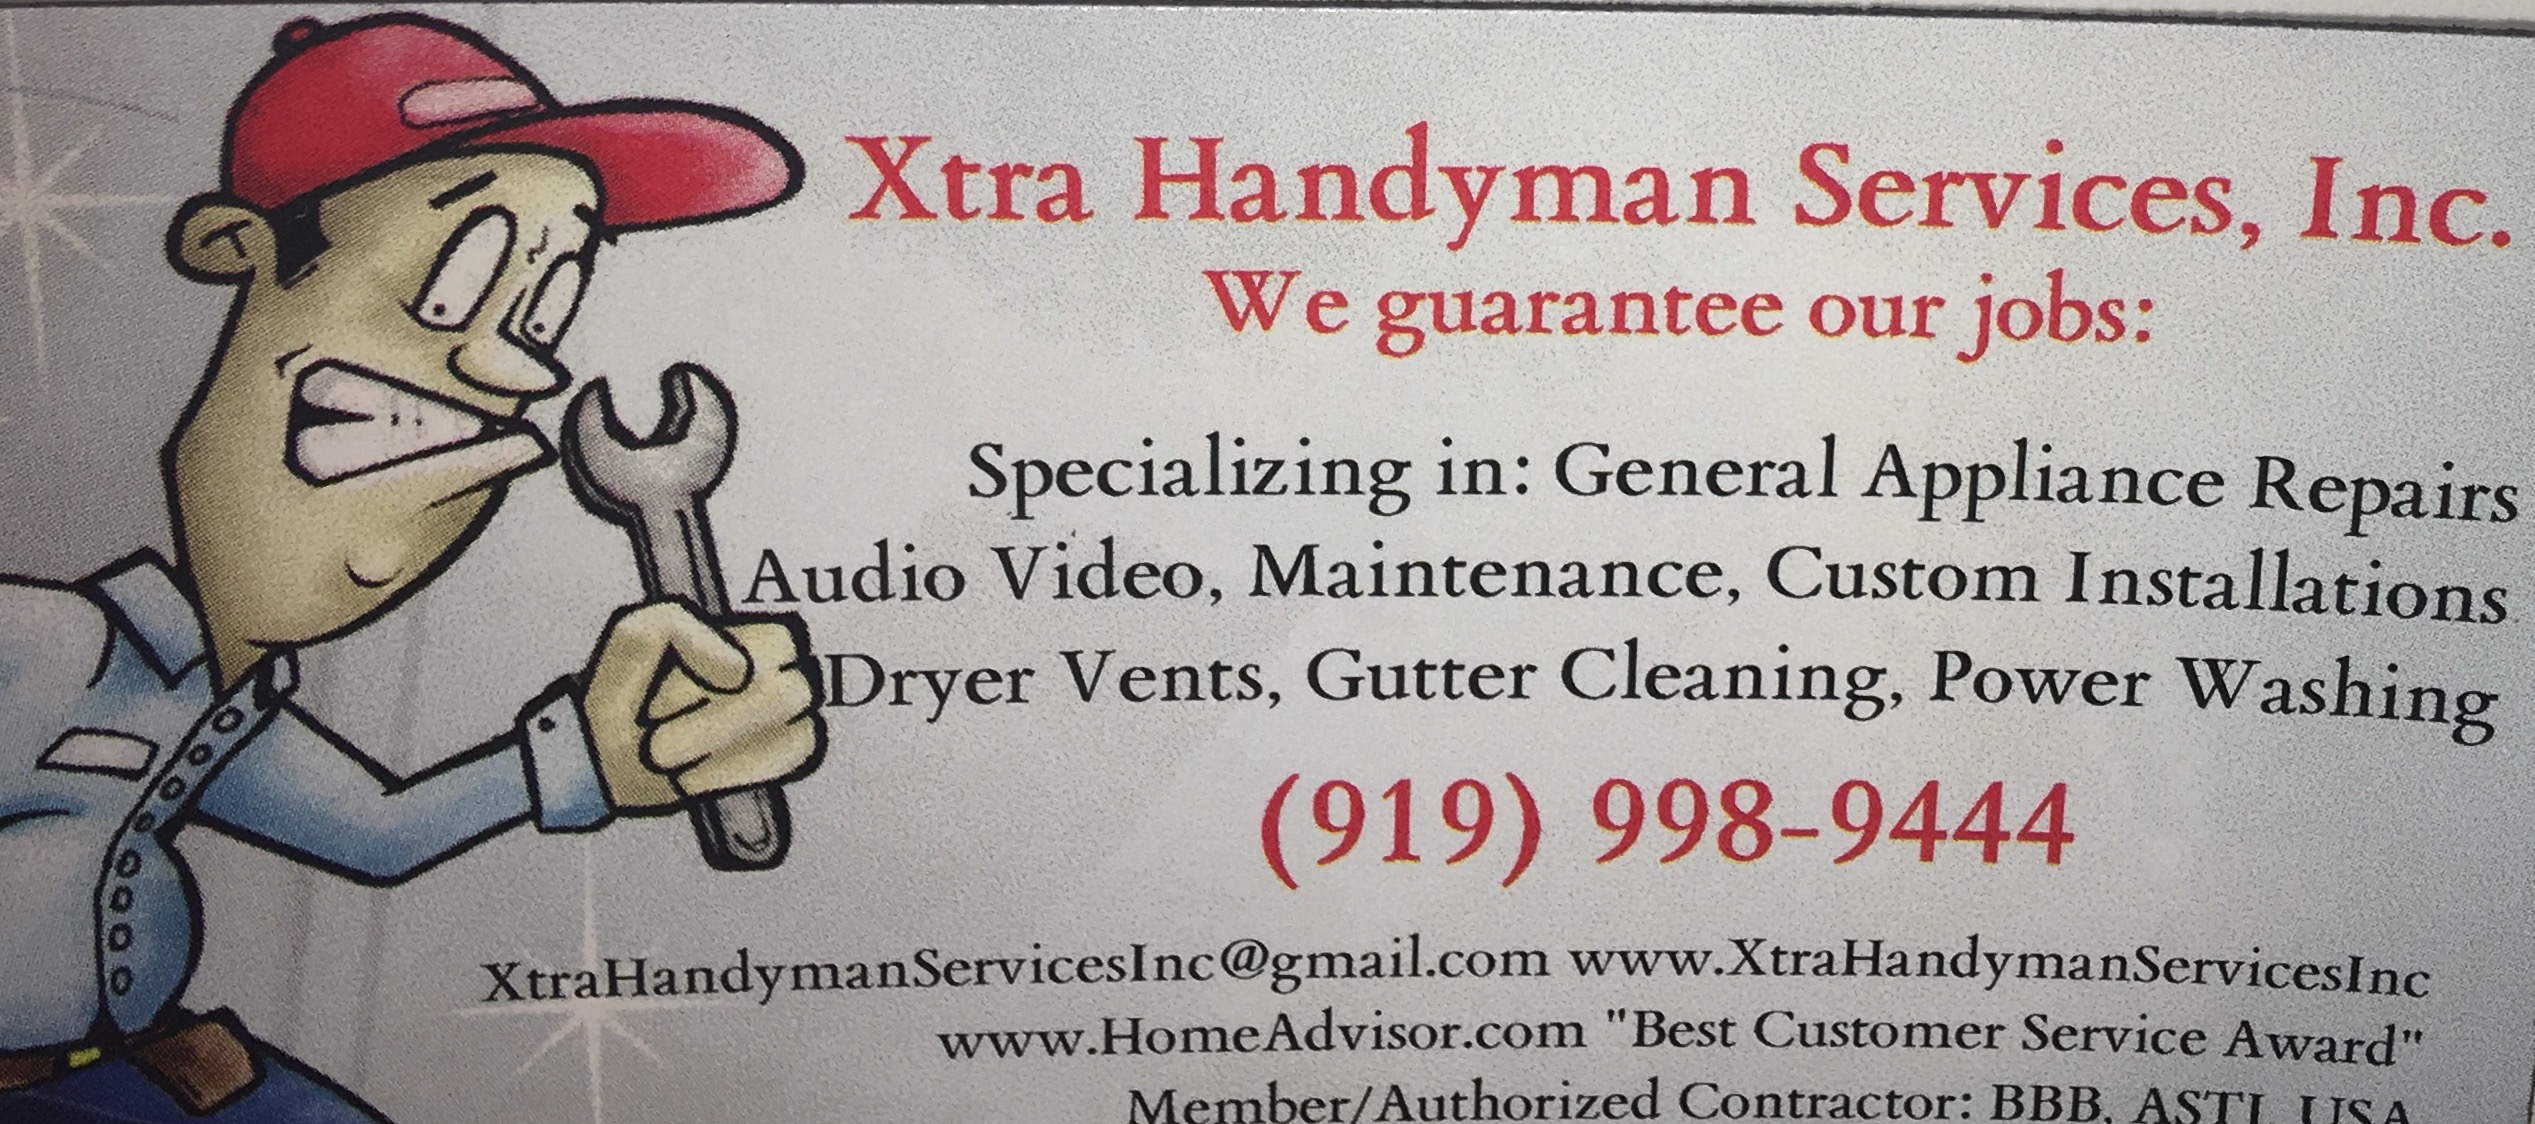 Xtra Handyman Services, Inc. Logo